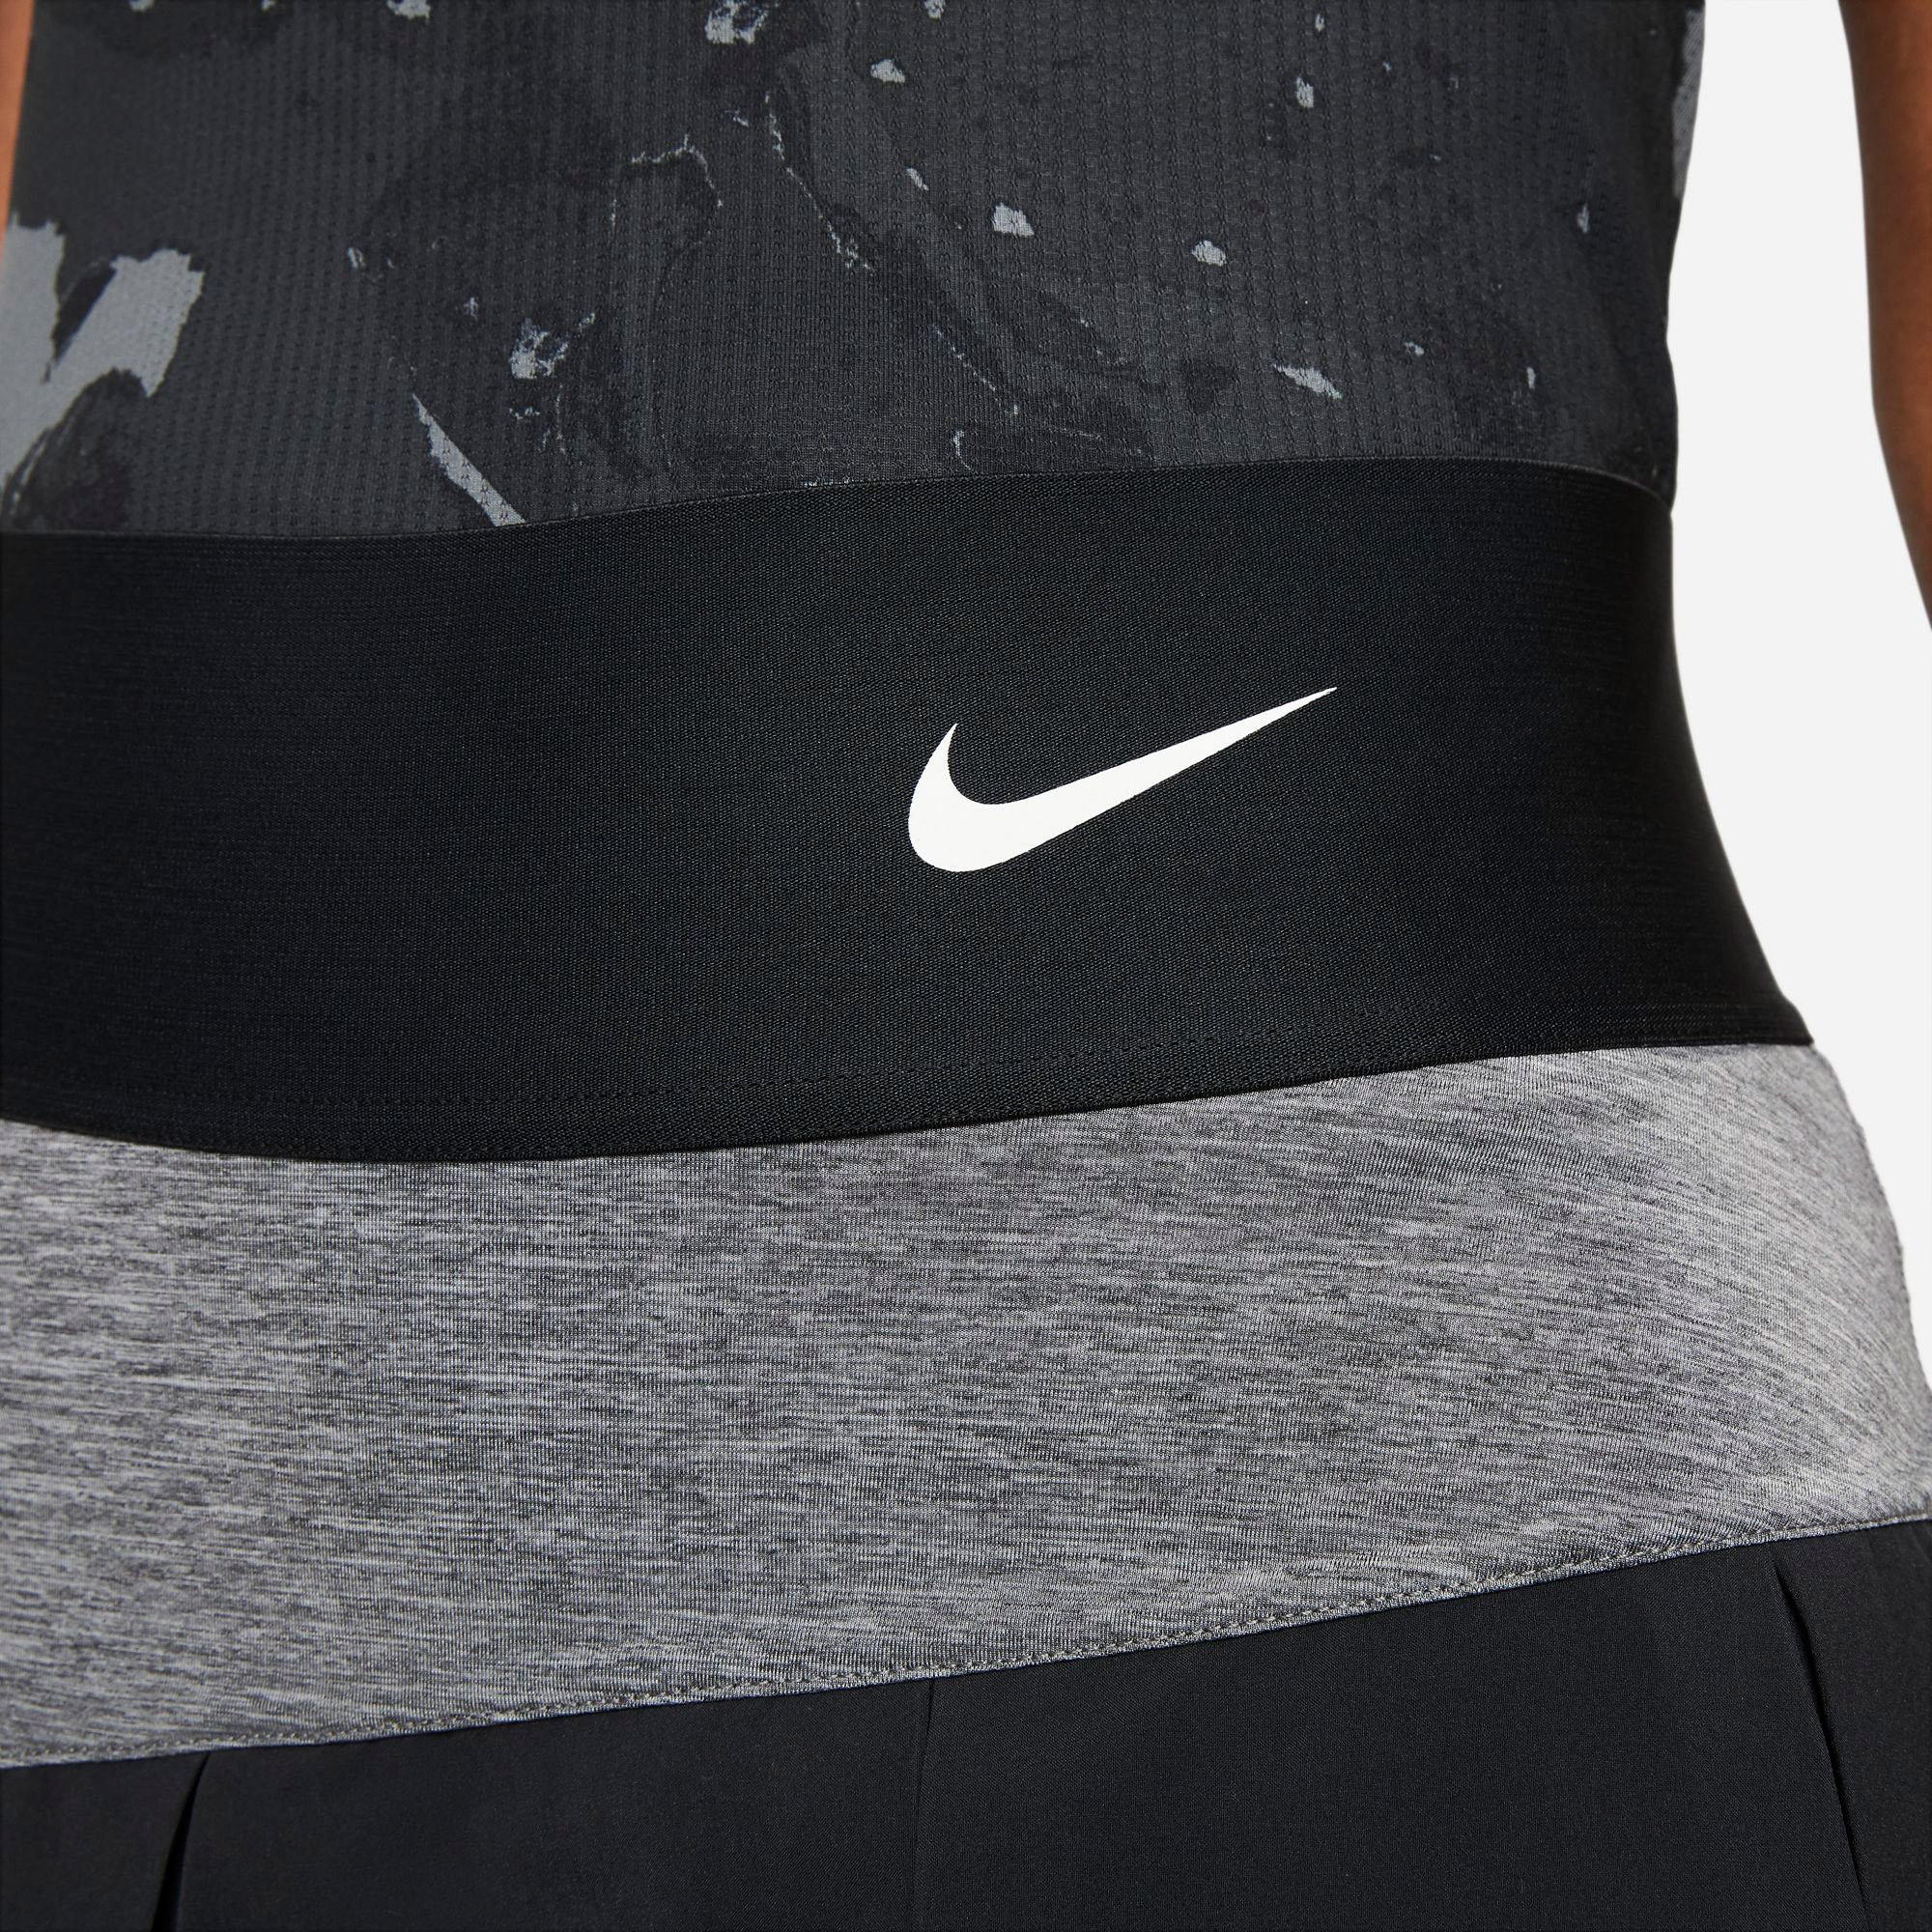 Nike Dri-FIT Advantage Women's Tennis Skirt Black (4)